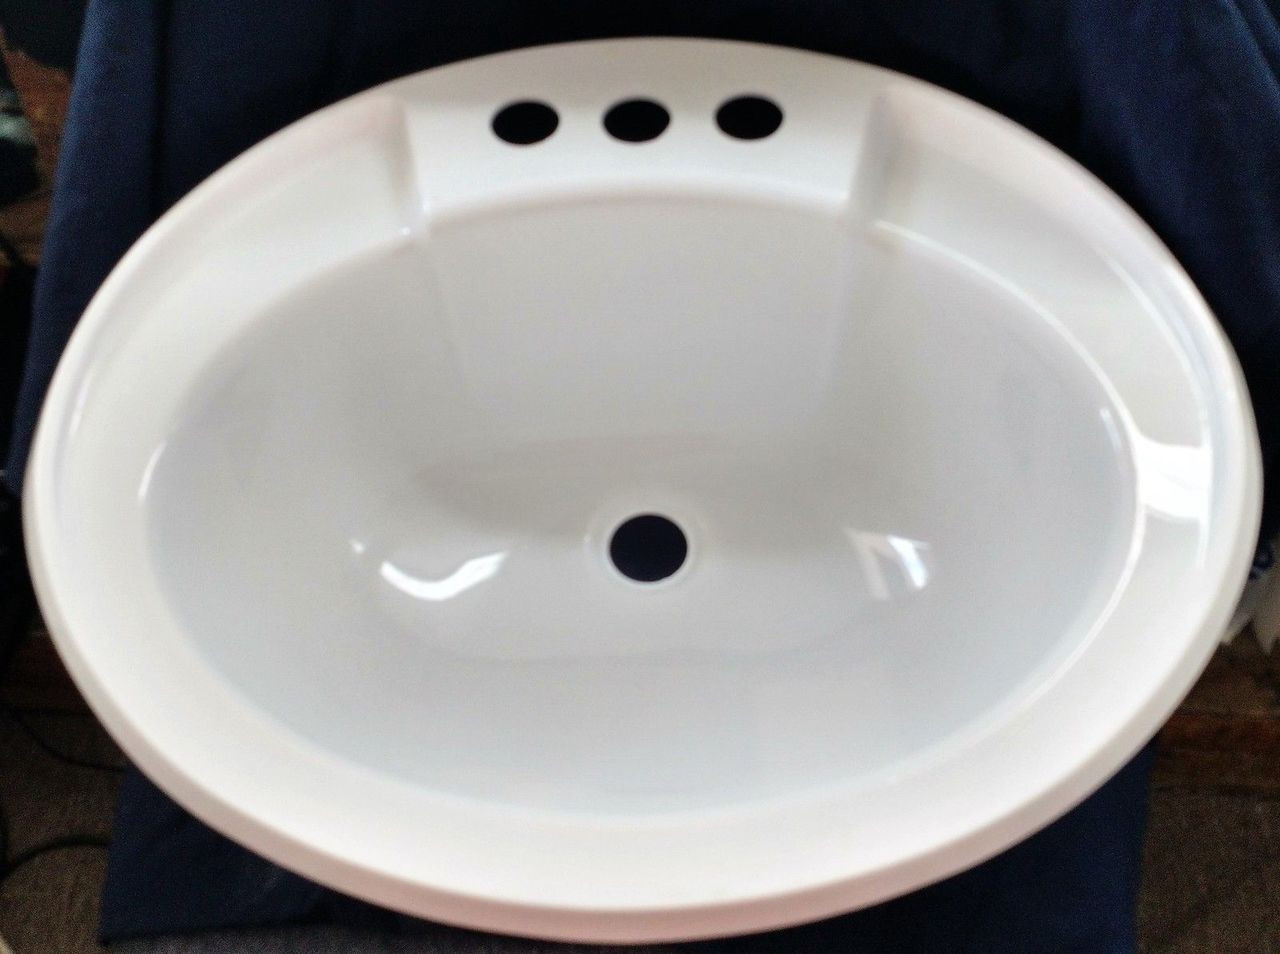 20 oval bathroom sink